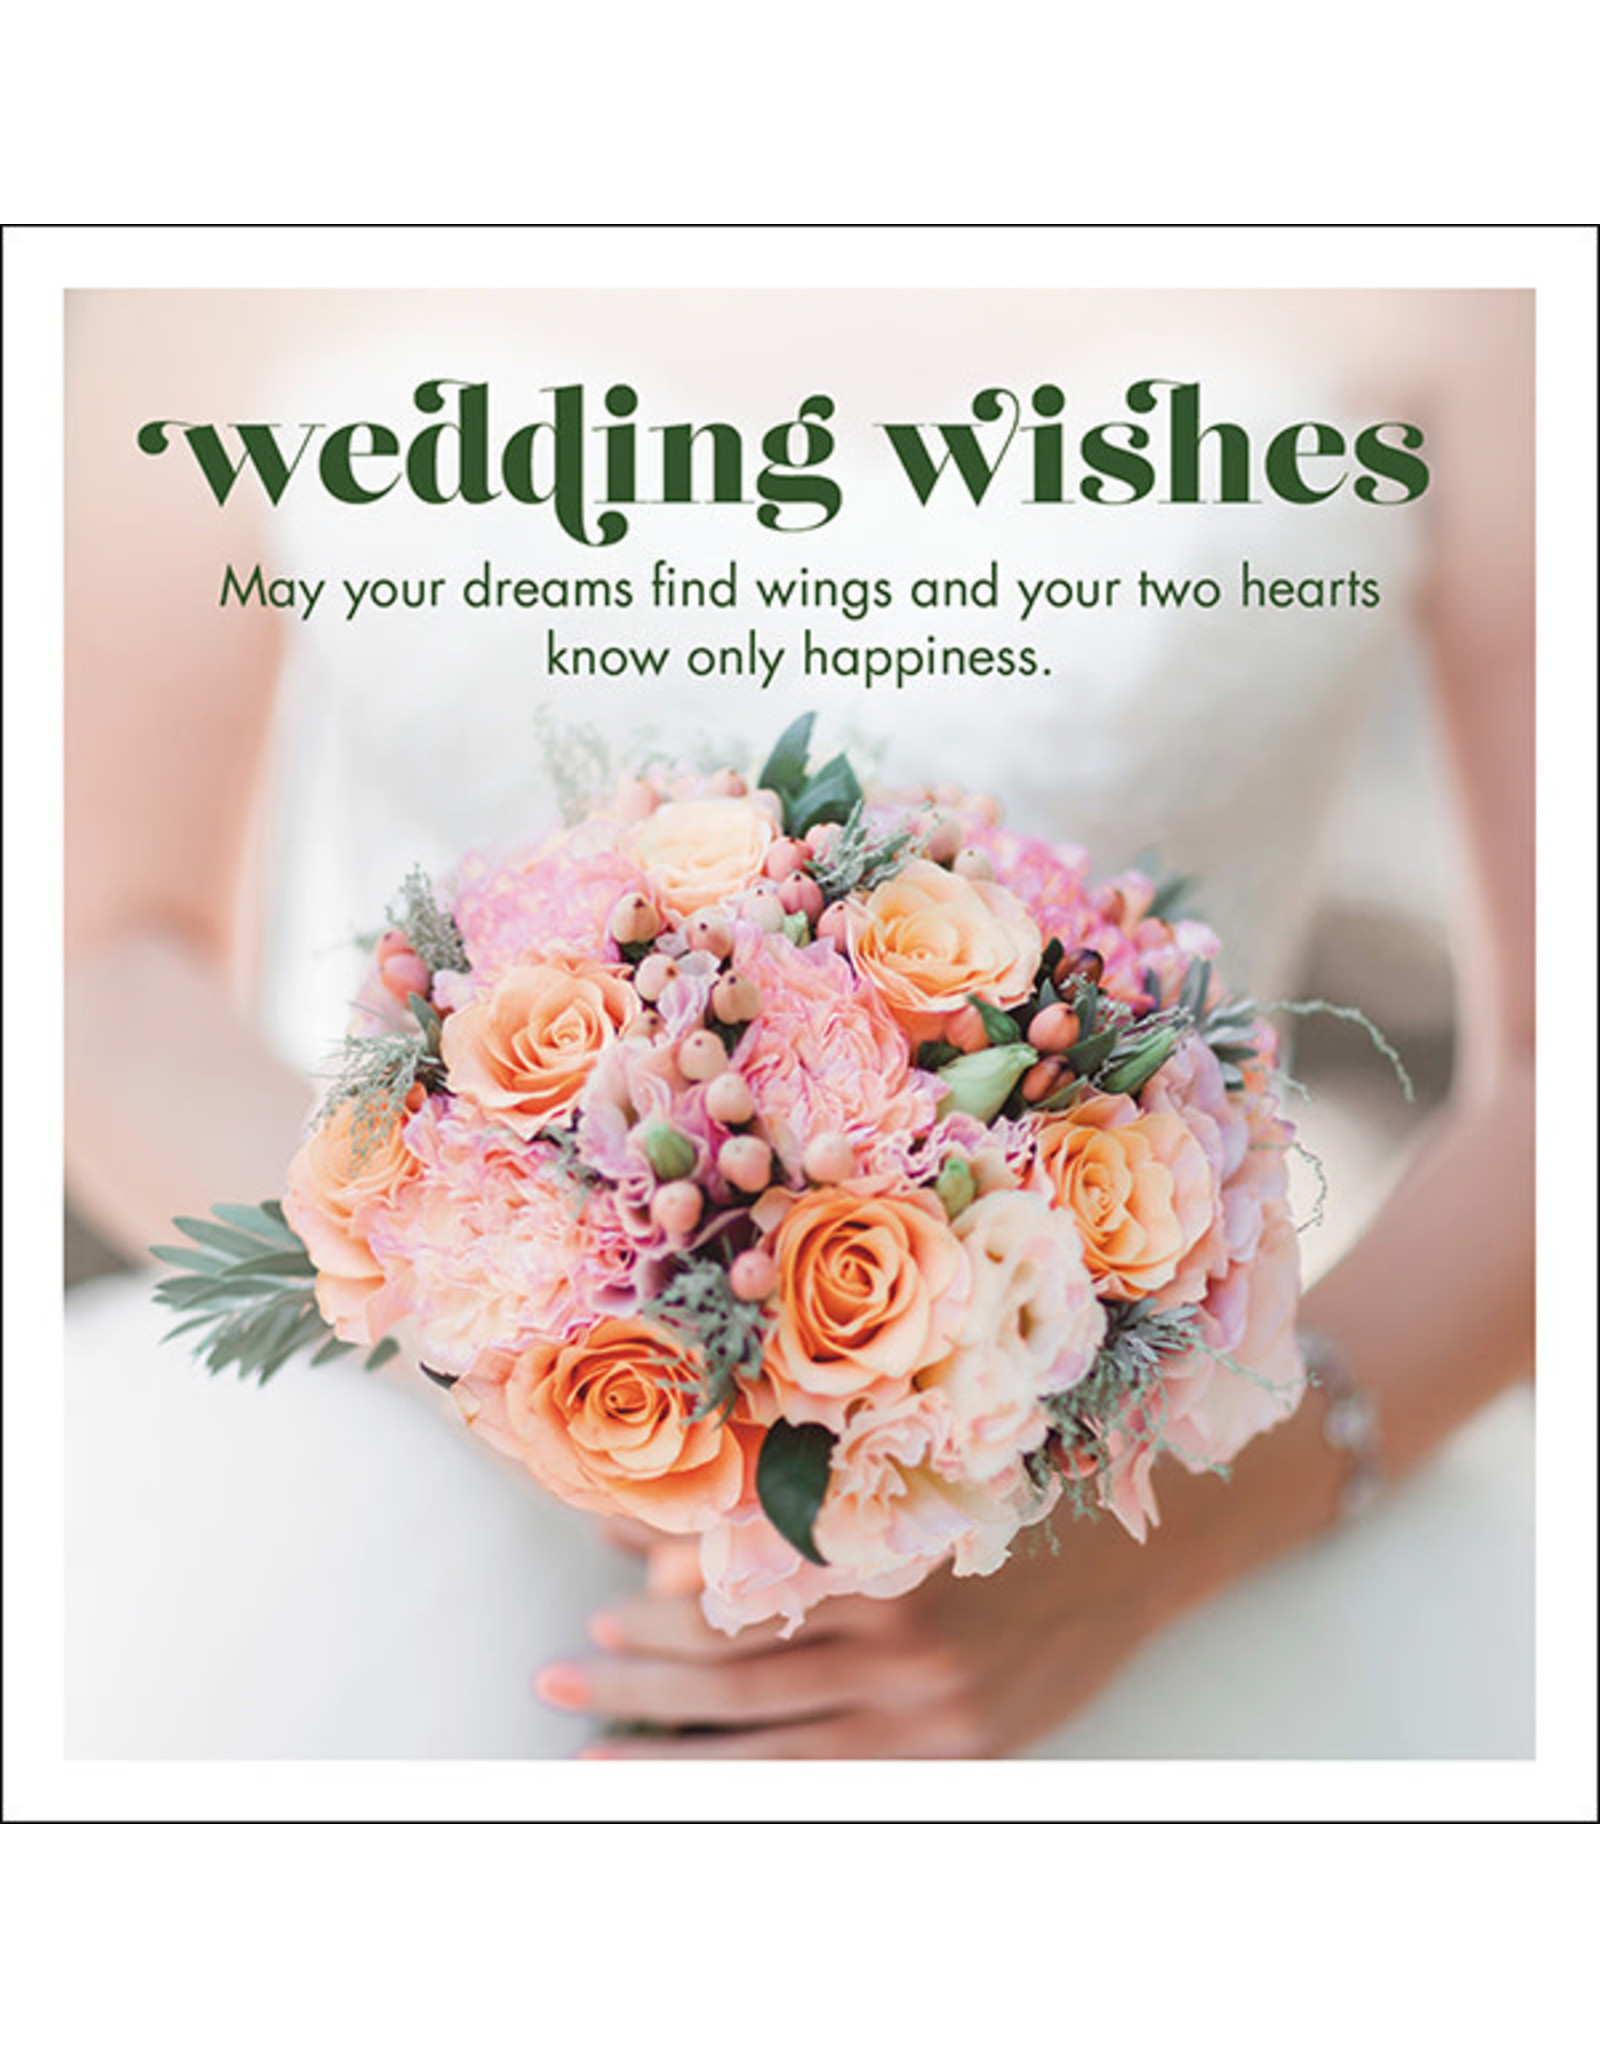 Affirmations Publishing House Wedding Wishes Greeting Card